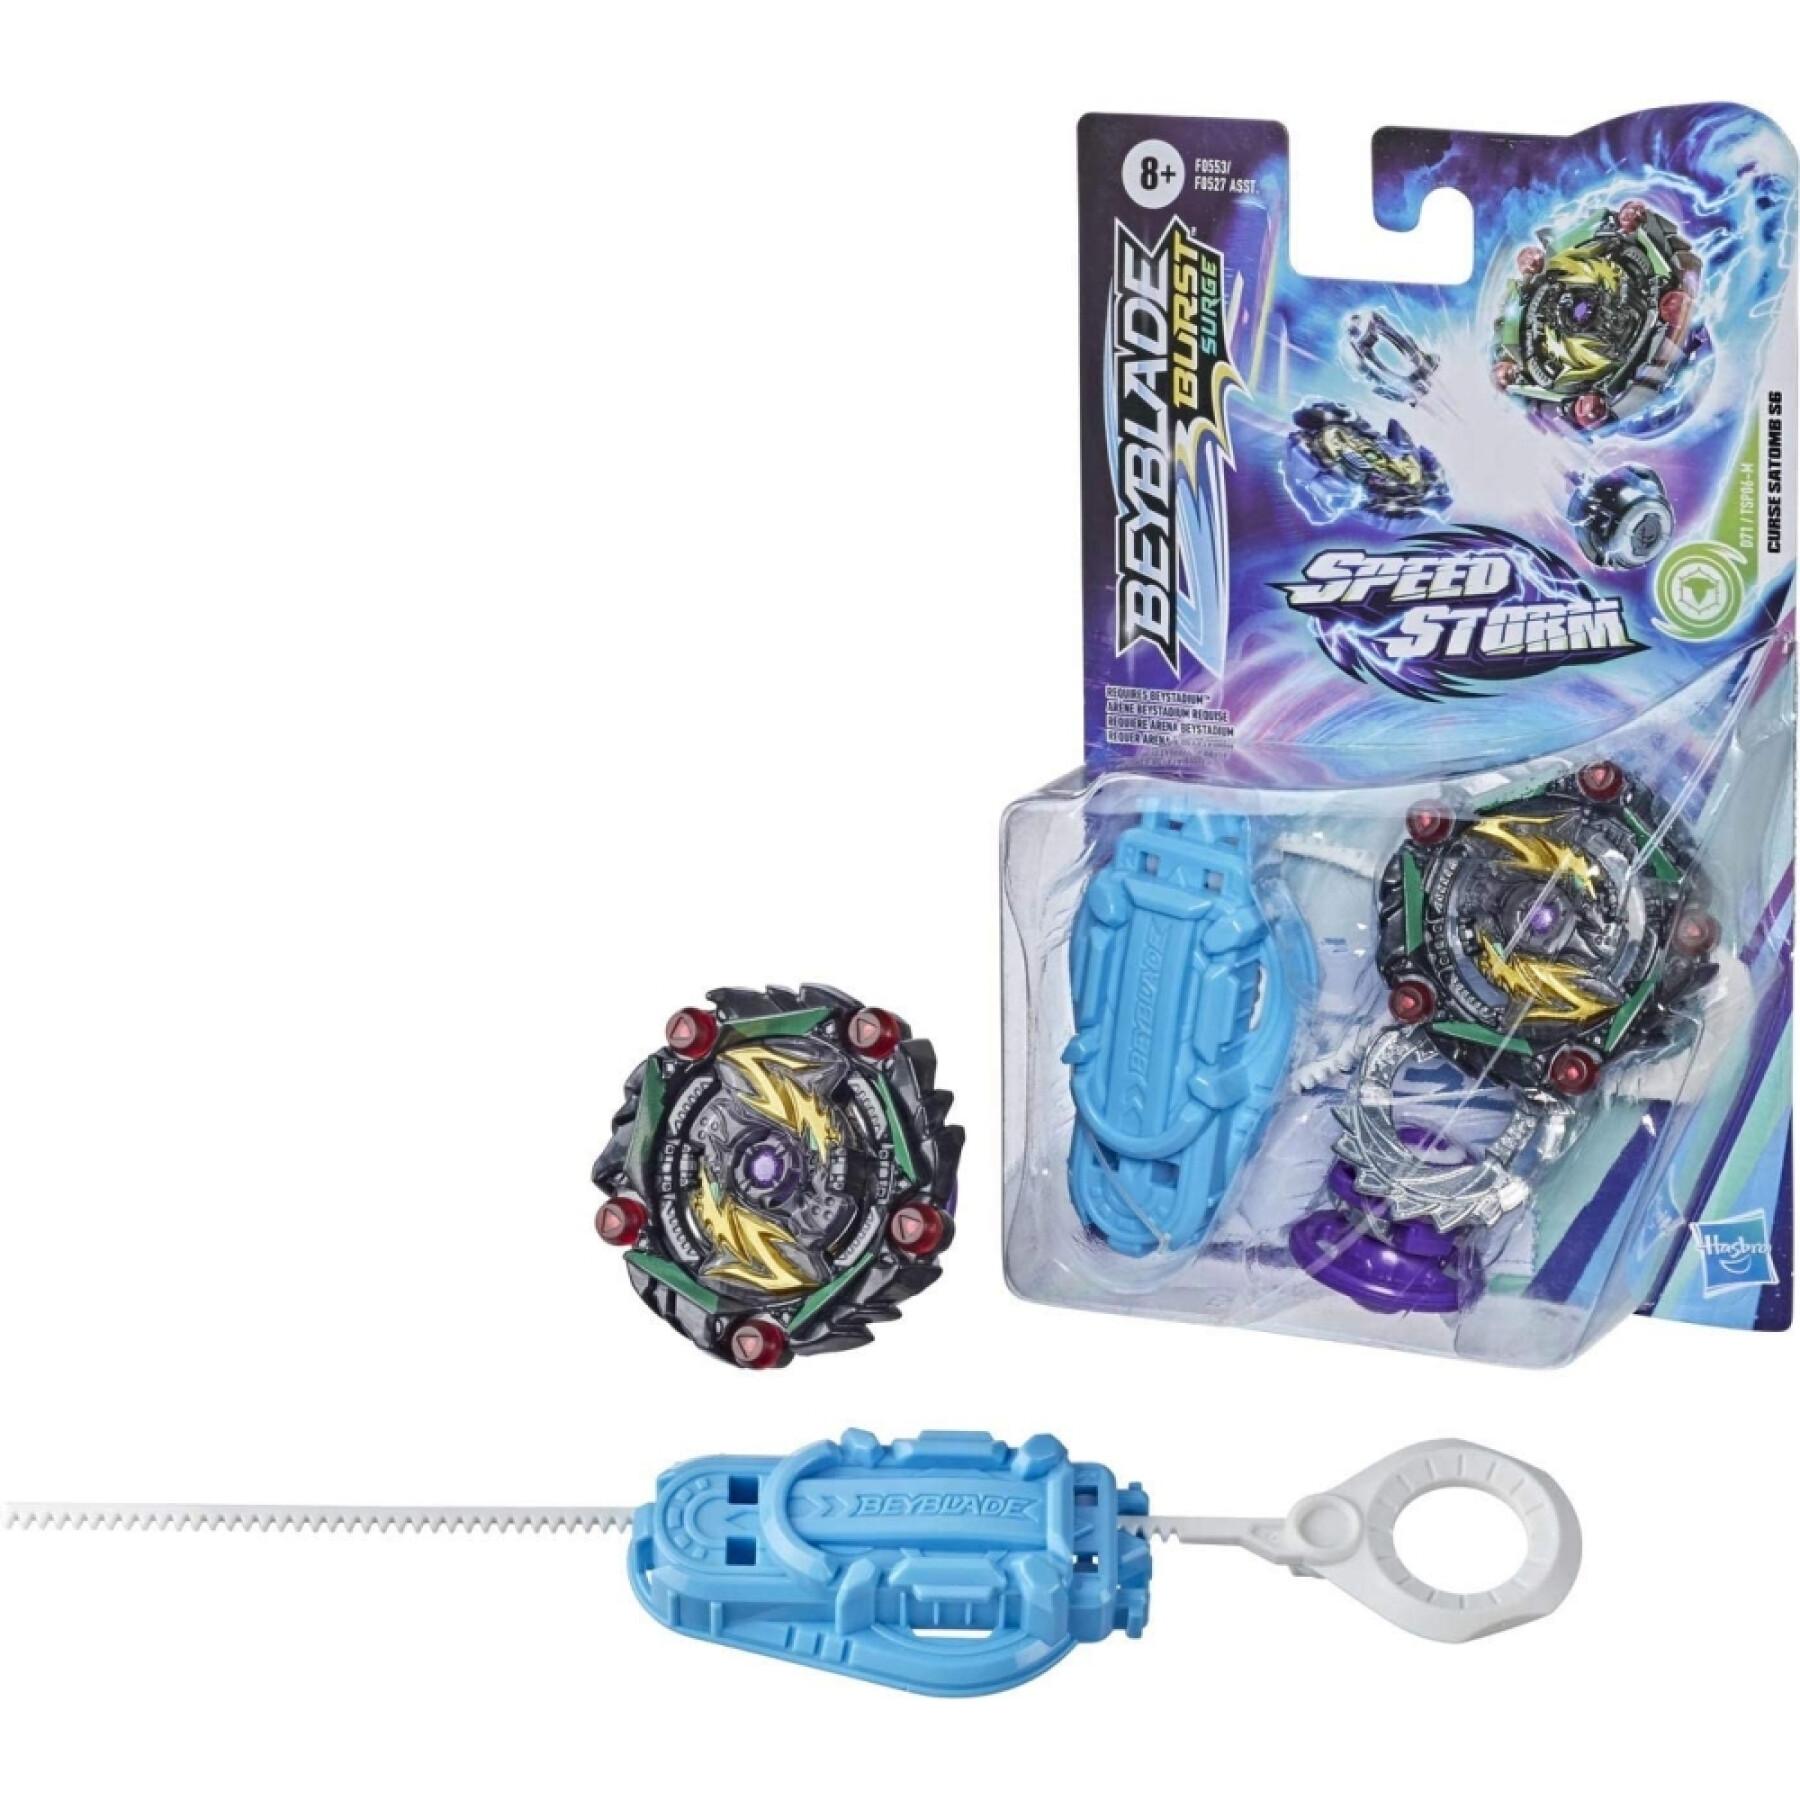 Spinning top en launcher pack Hasbro Beyblade